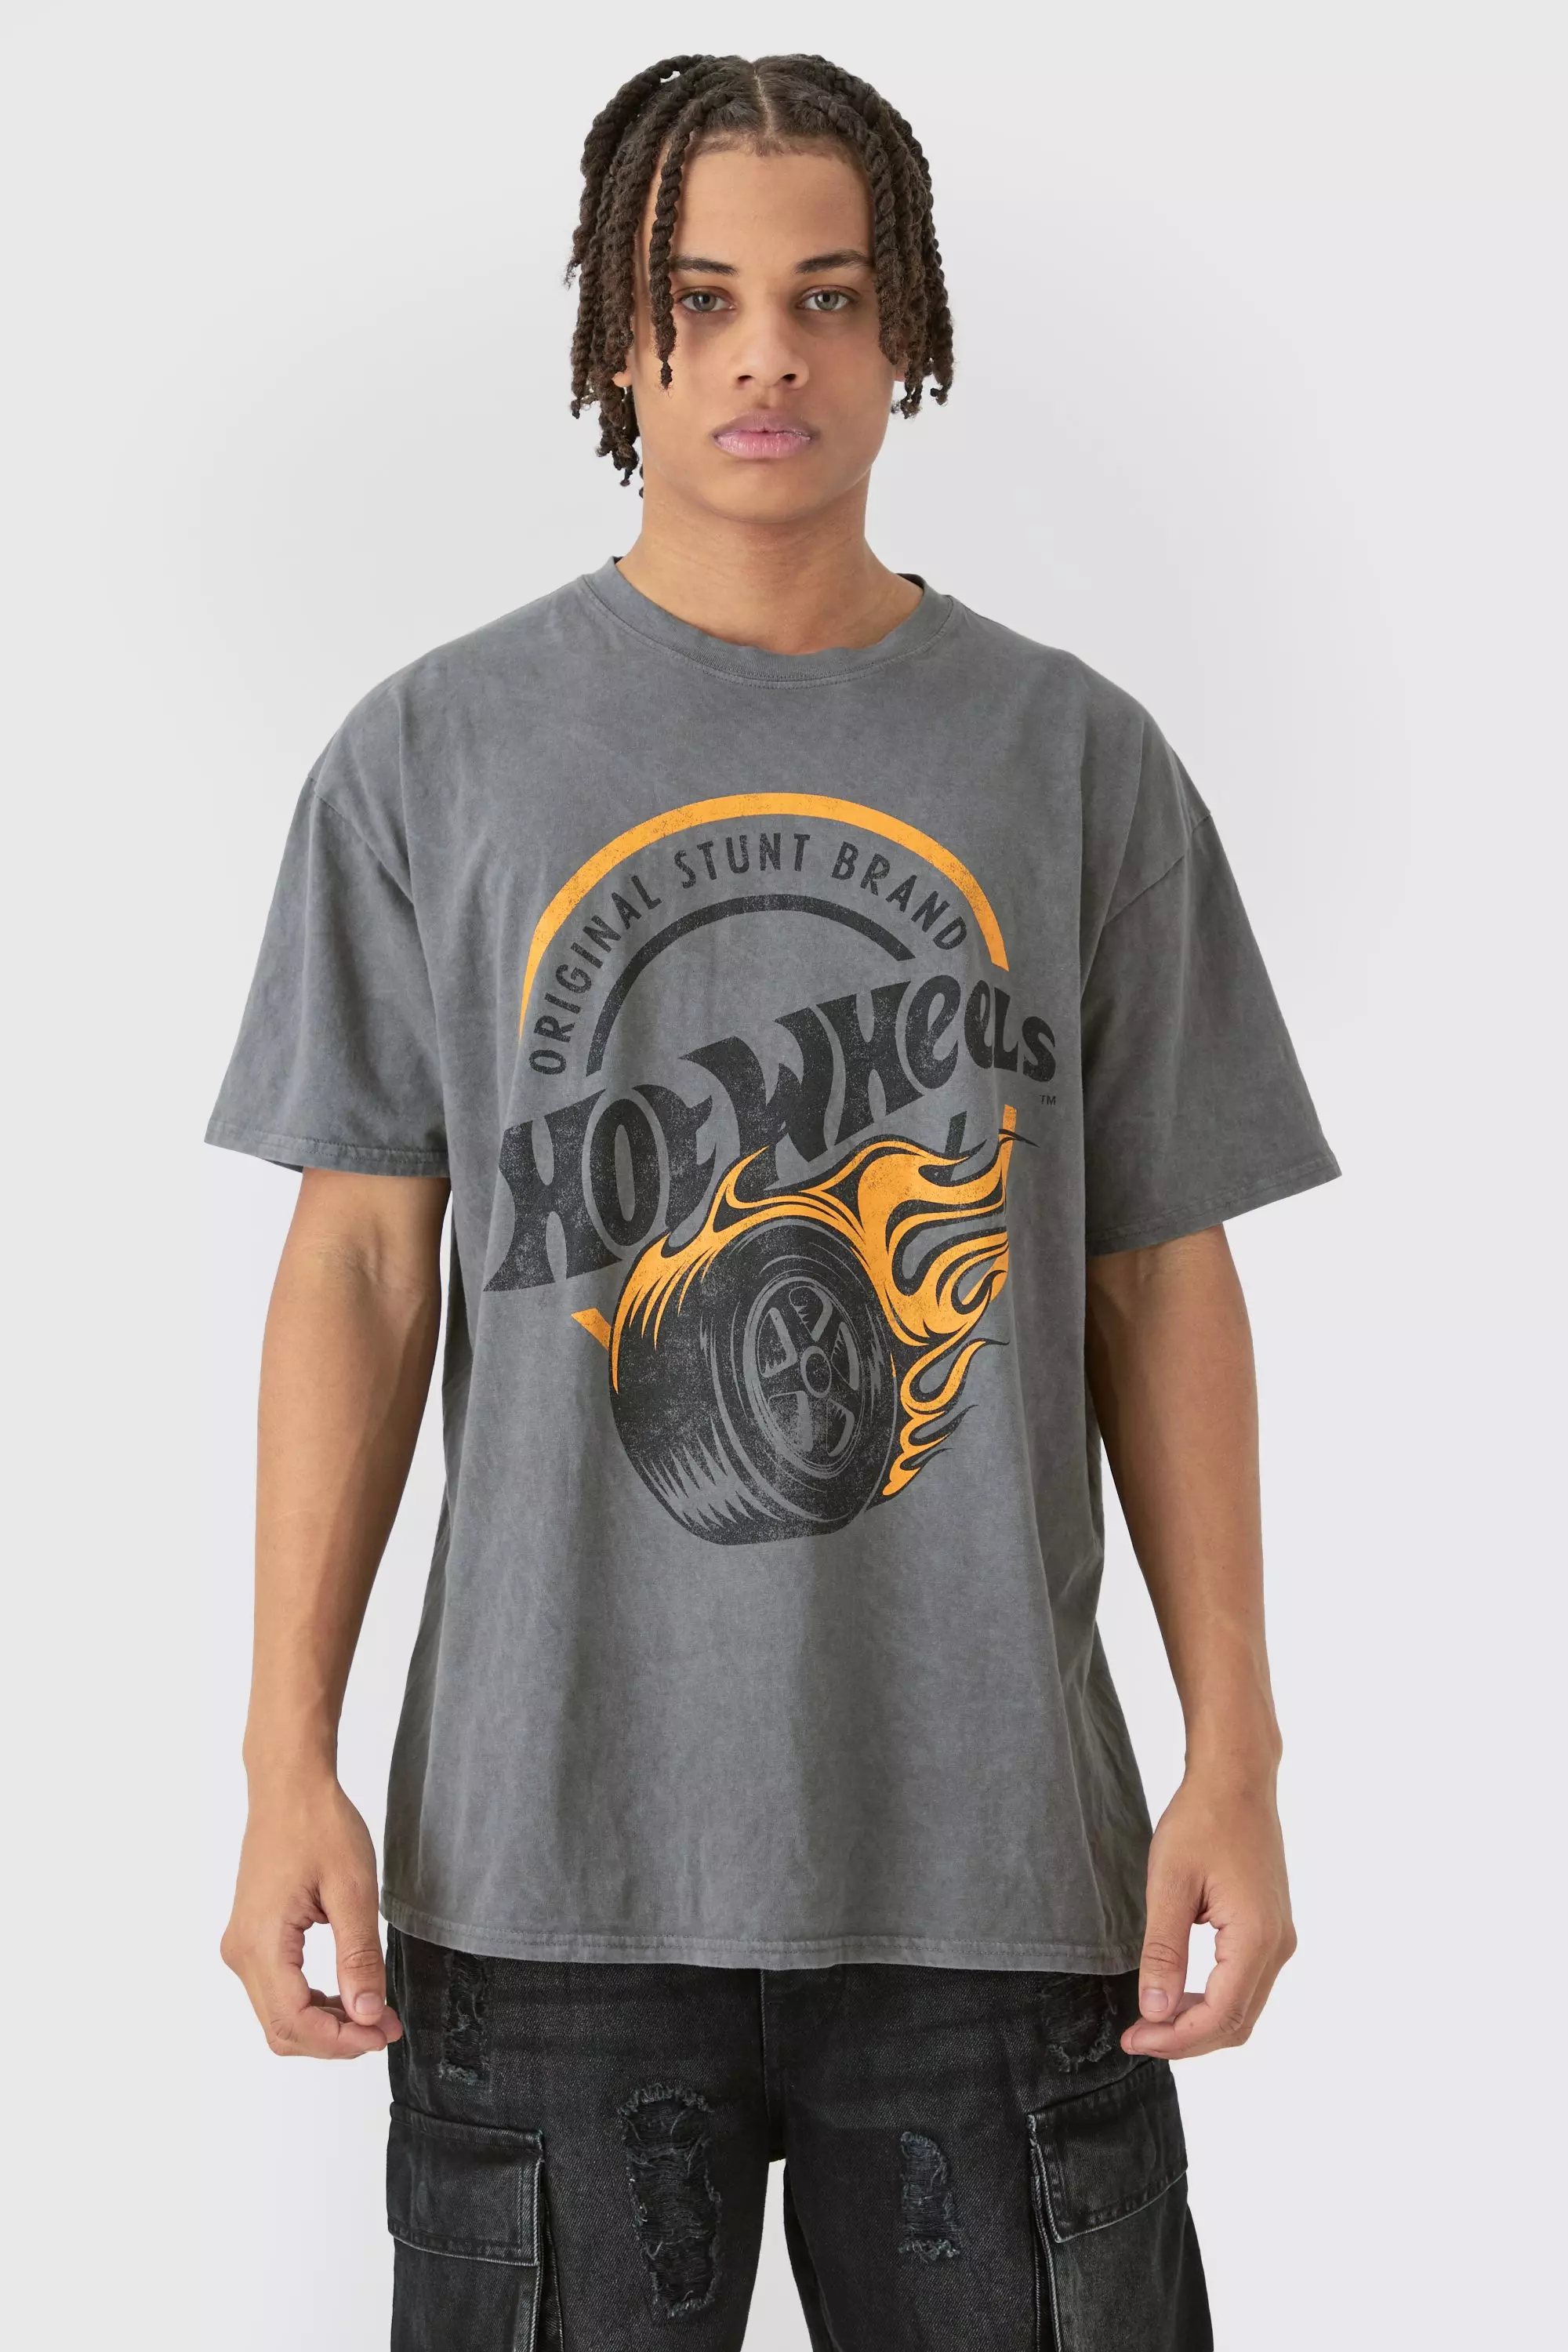 Oversized Hotwheels Wash License T-shirt Charcoal